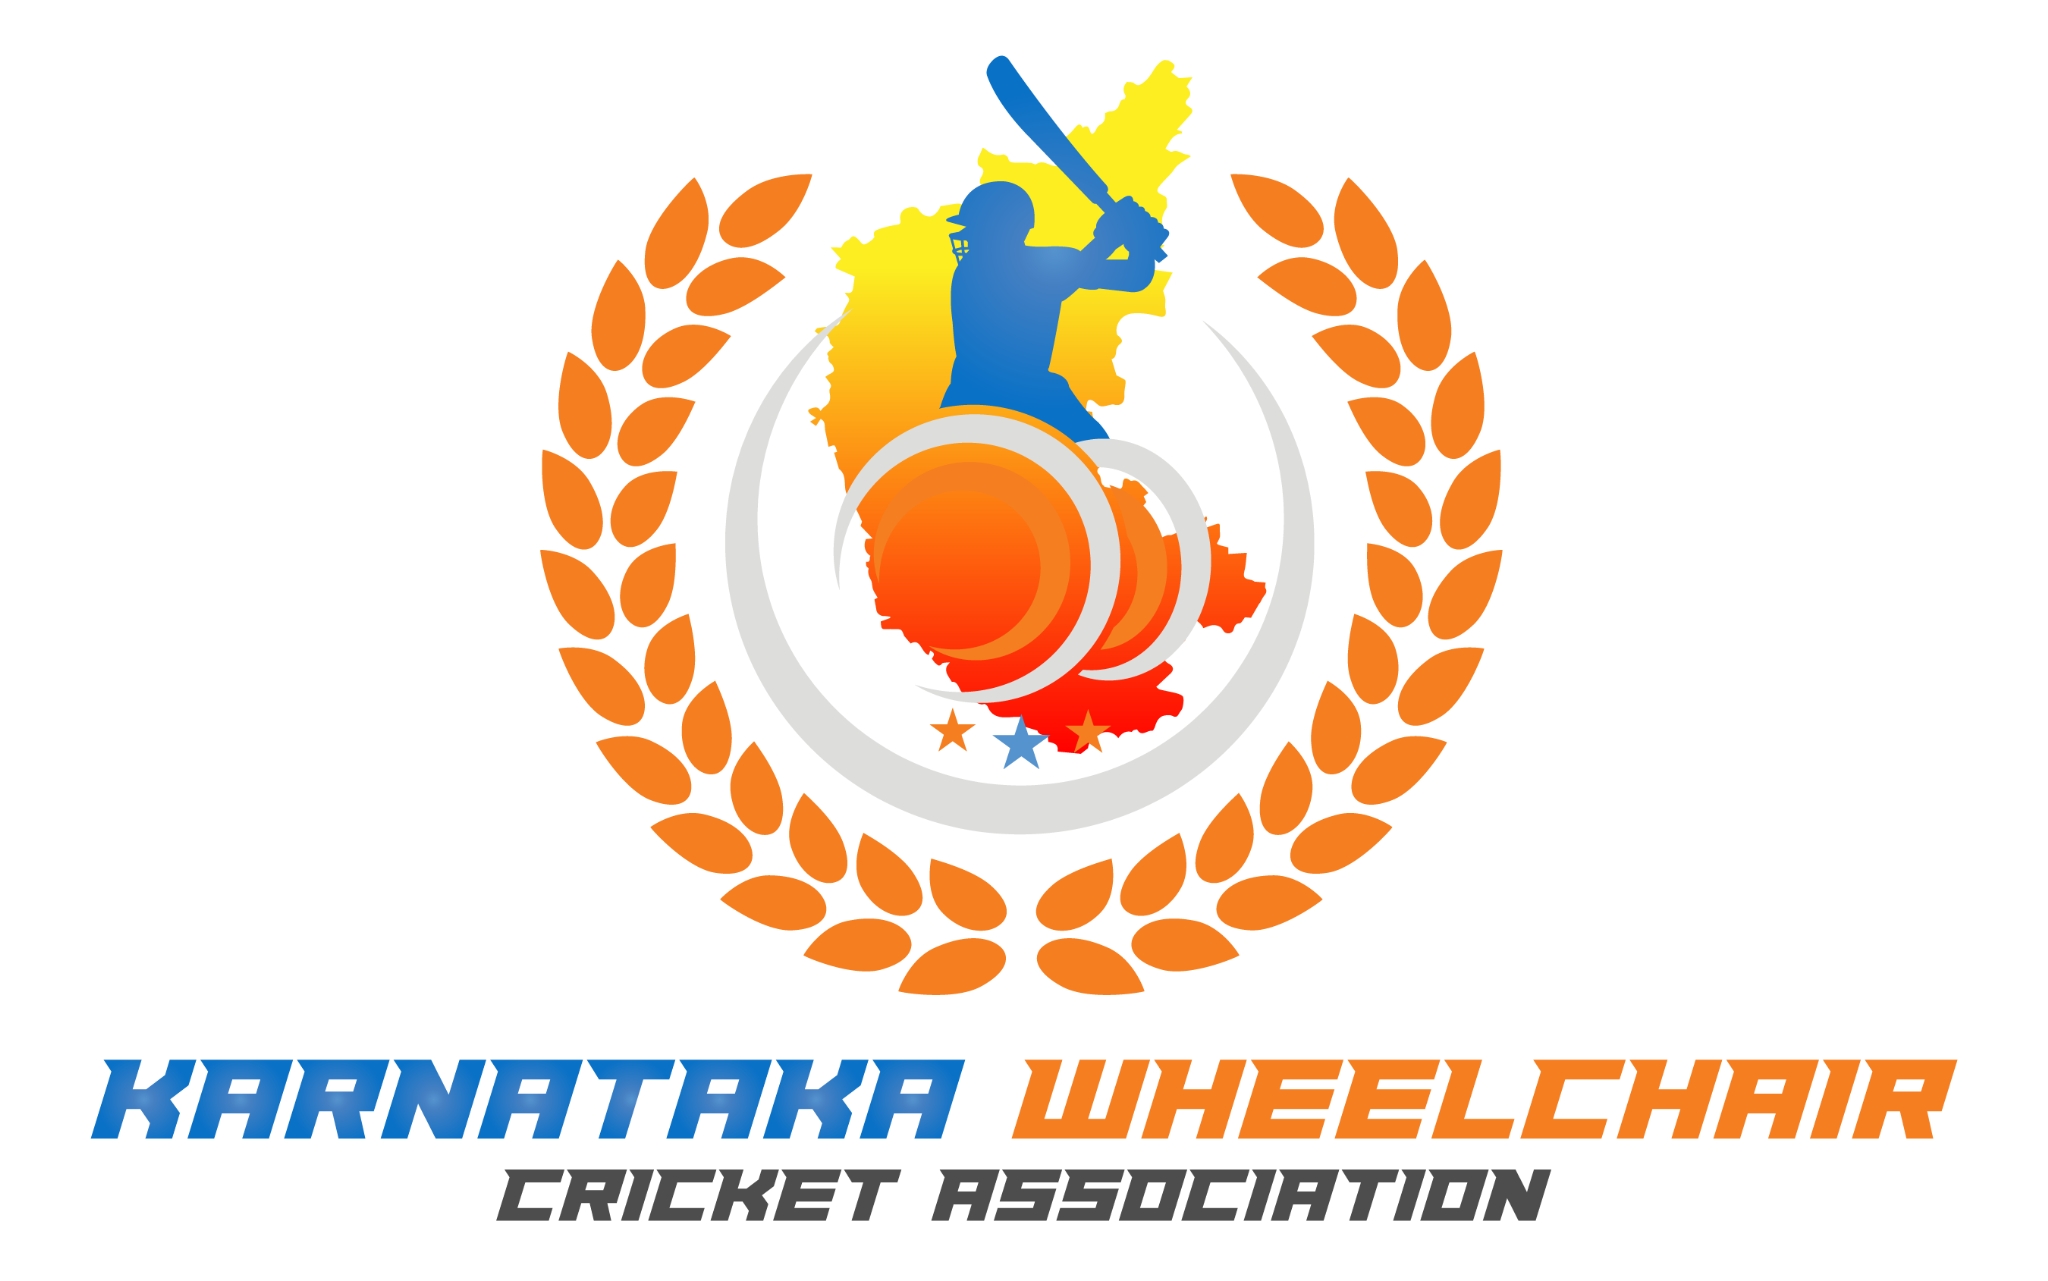 Karnataka Wheelchair Cricket Association